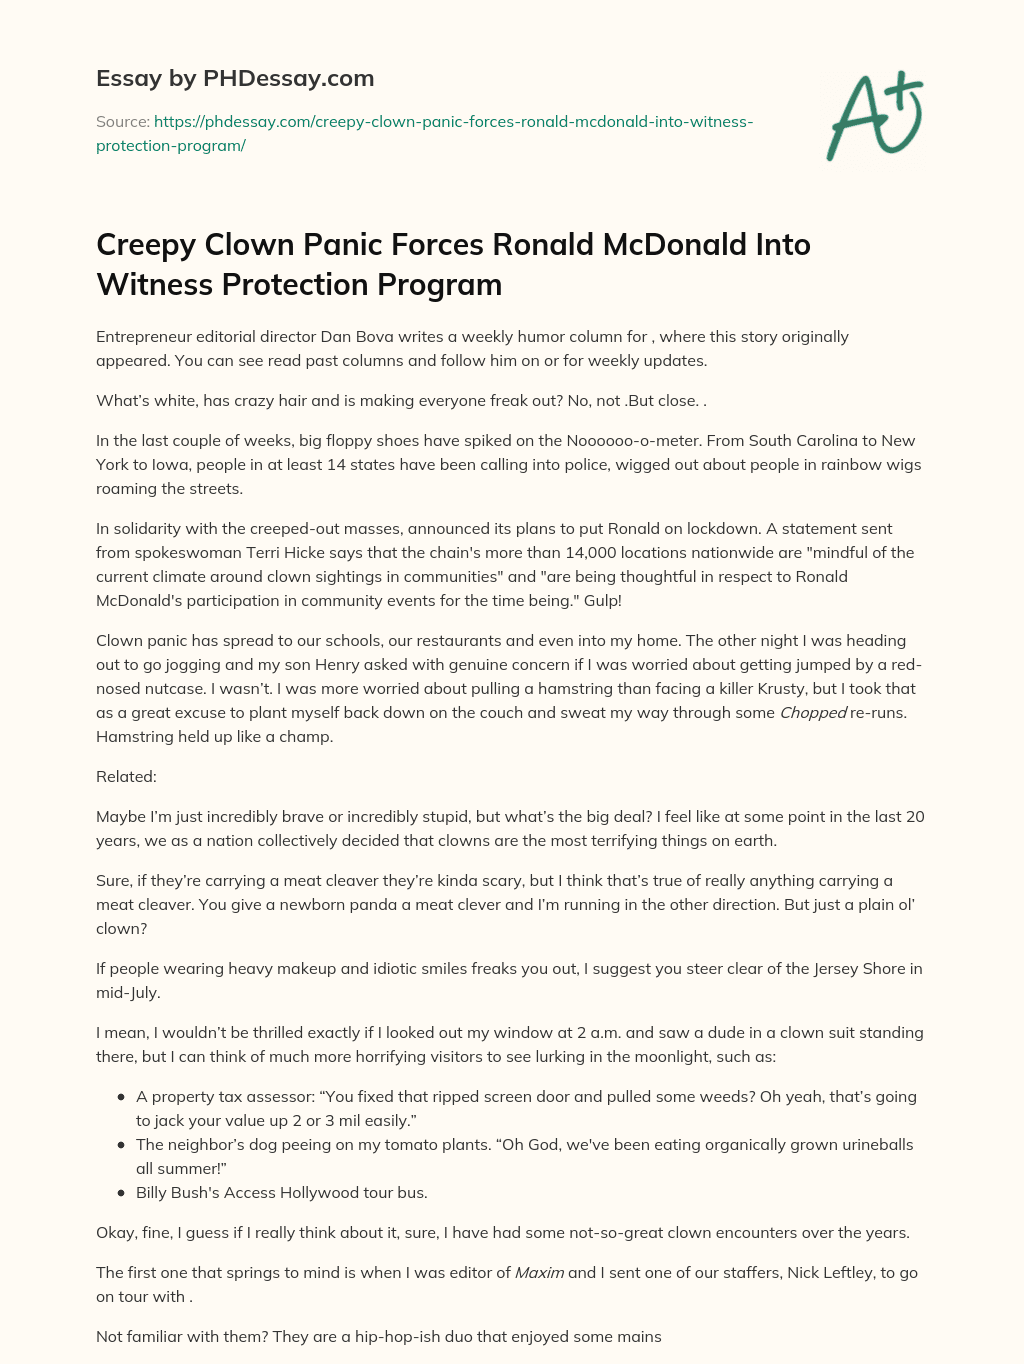 Creepy Clown Panic Forces Ronald McDonald Into Witness Protection Program essay